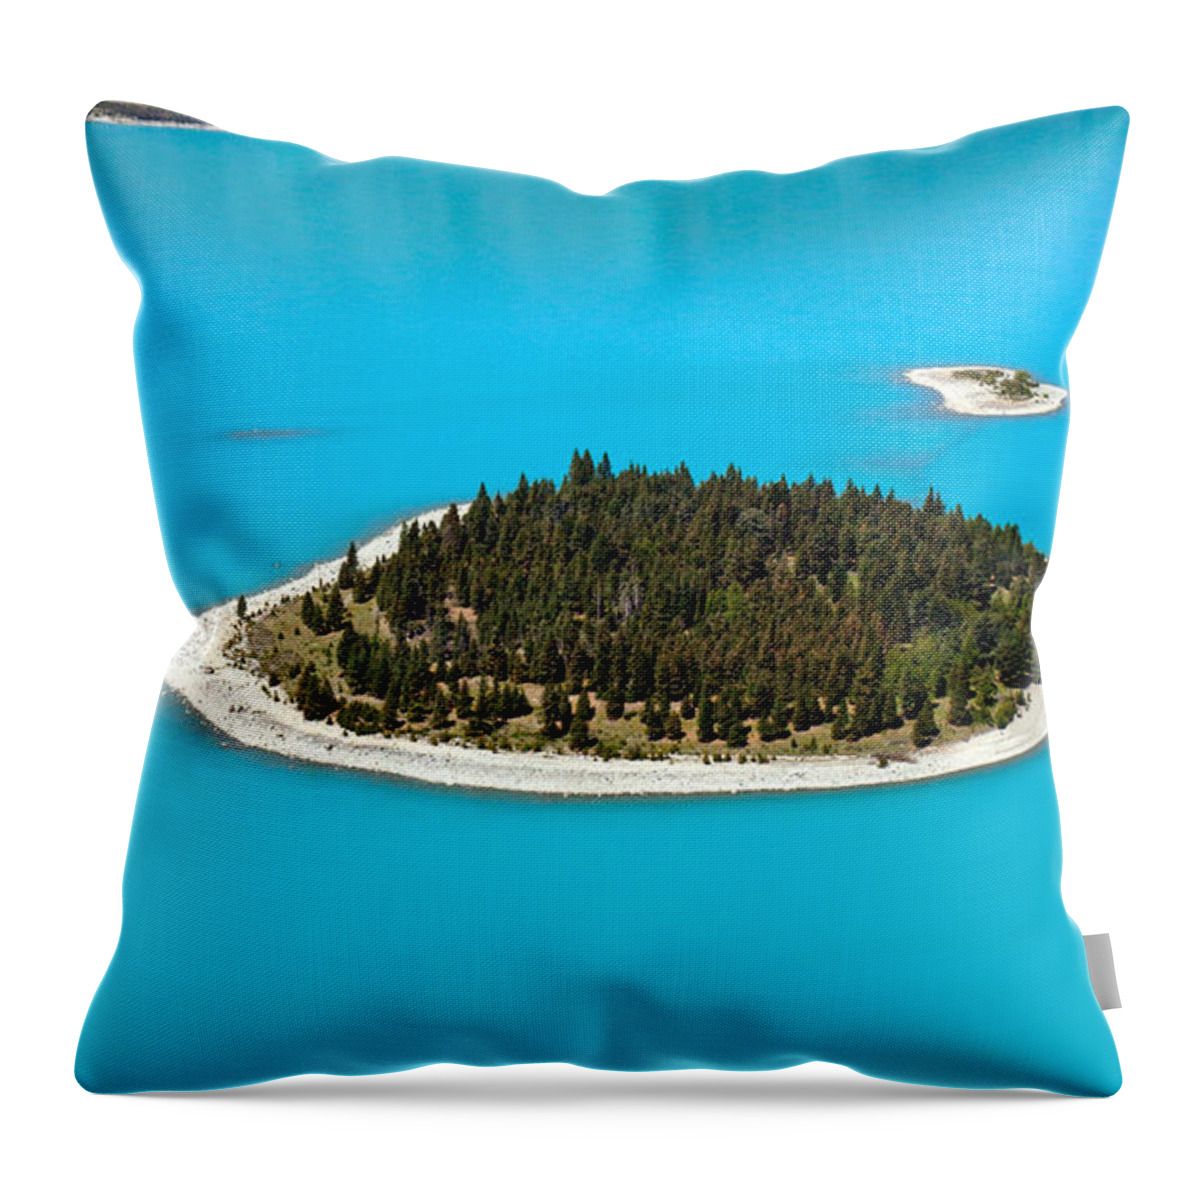 Motuariki Throw Pillow featuring the photograph Motuariki Island by Nicholas Blackwell